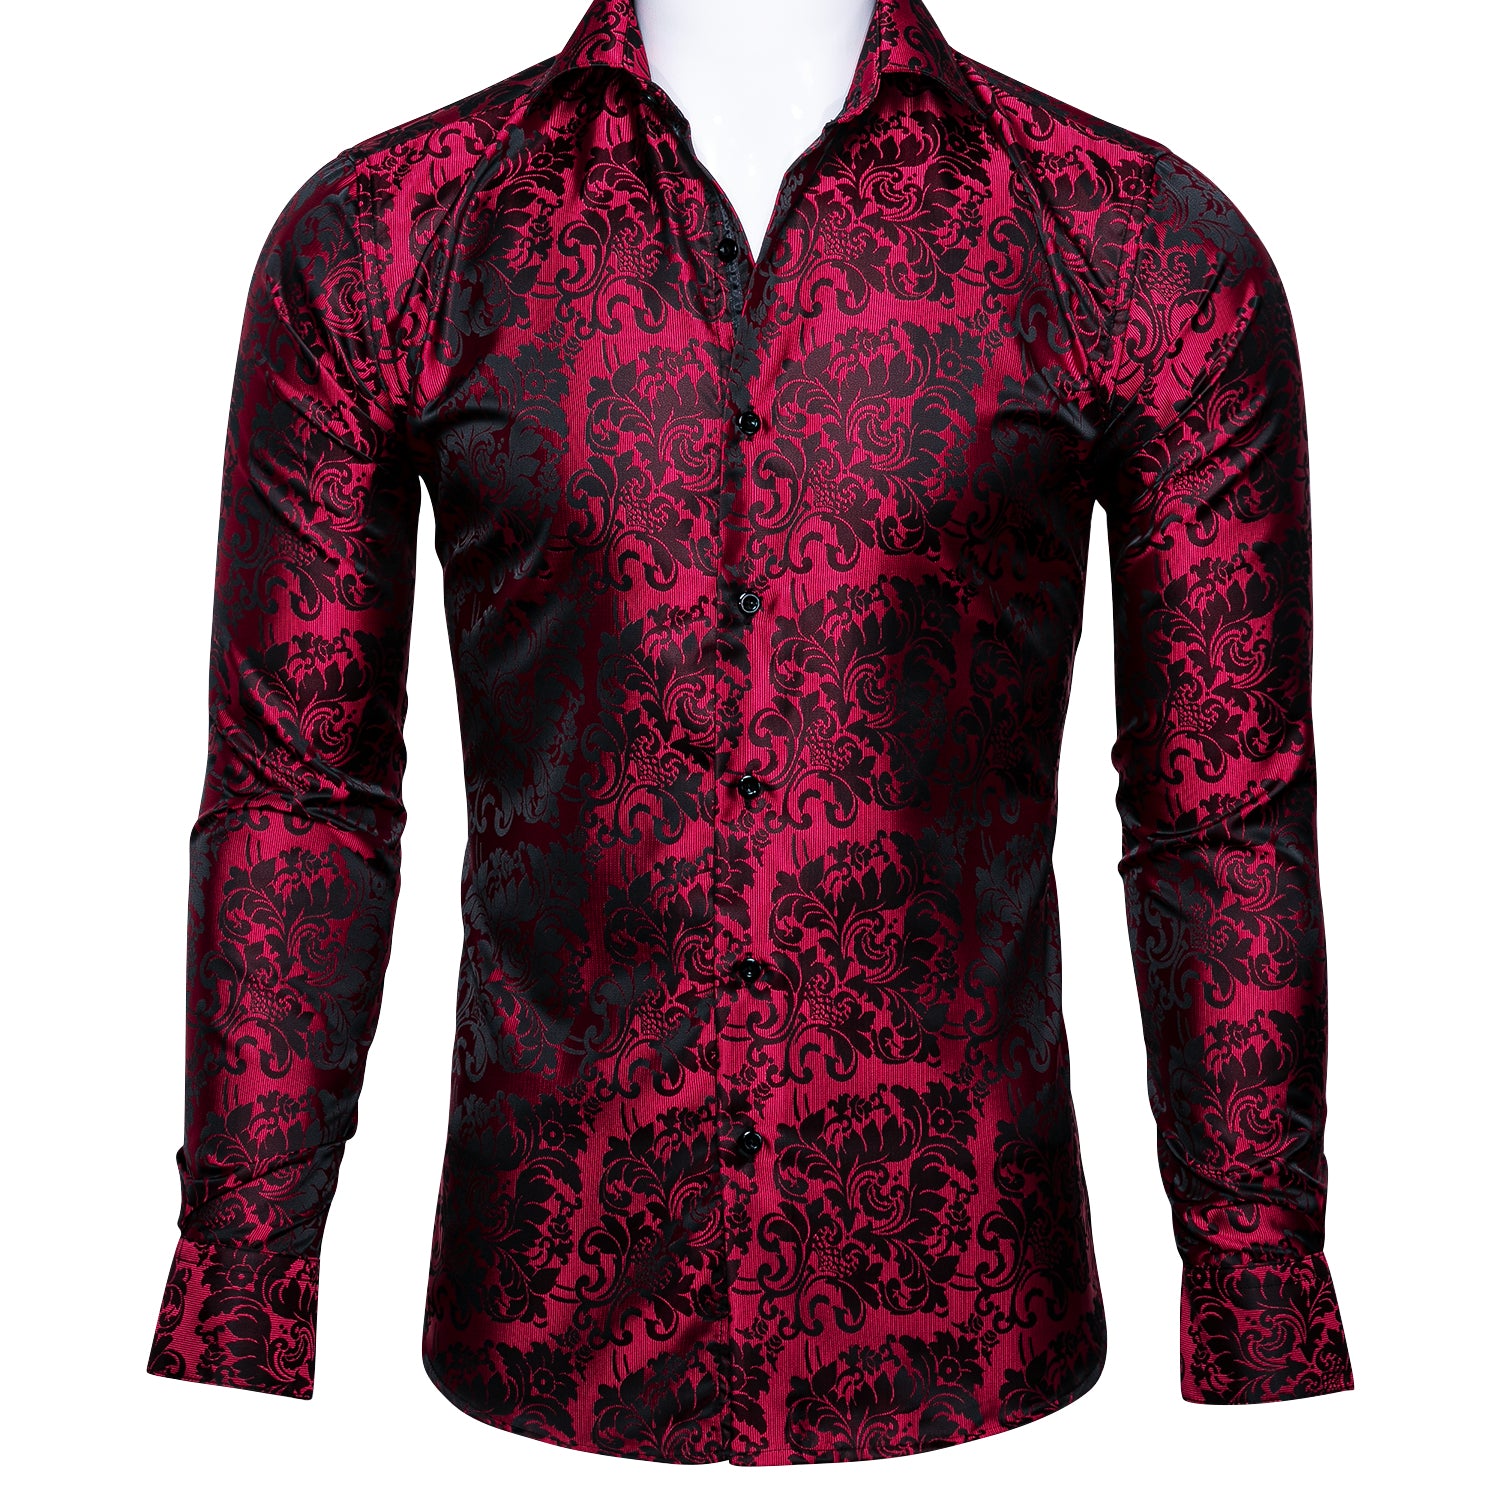 Barry.wang Red Black Floral Shirt – BarryWang